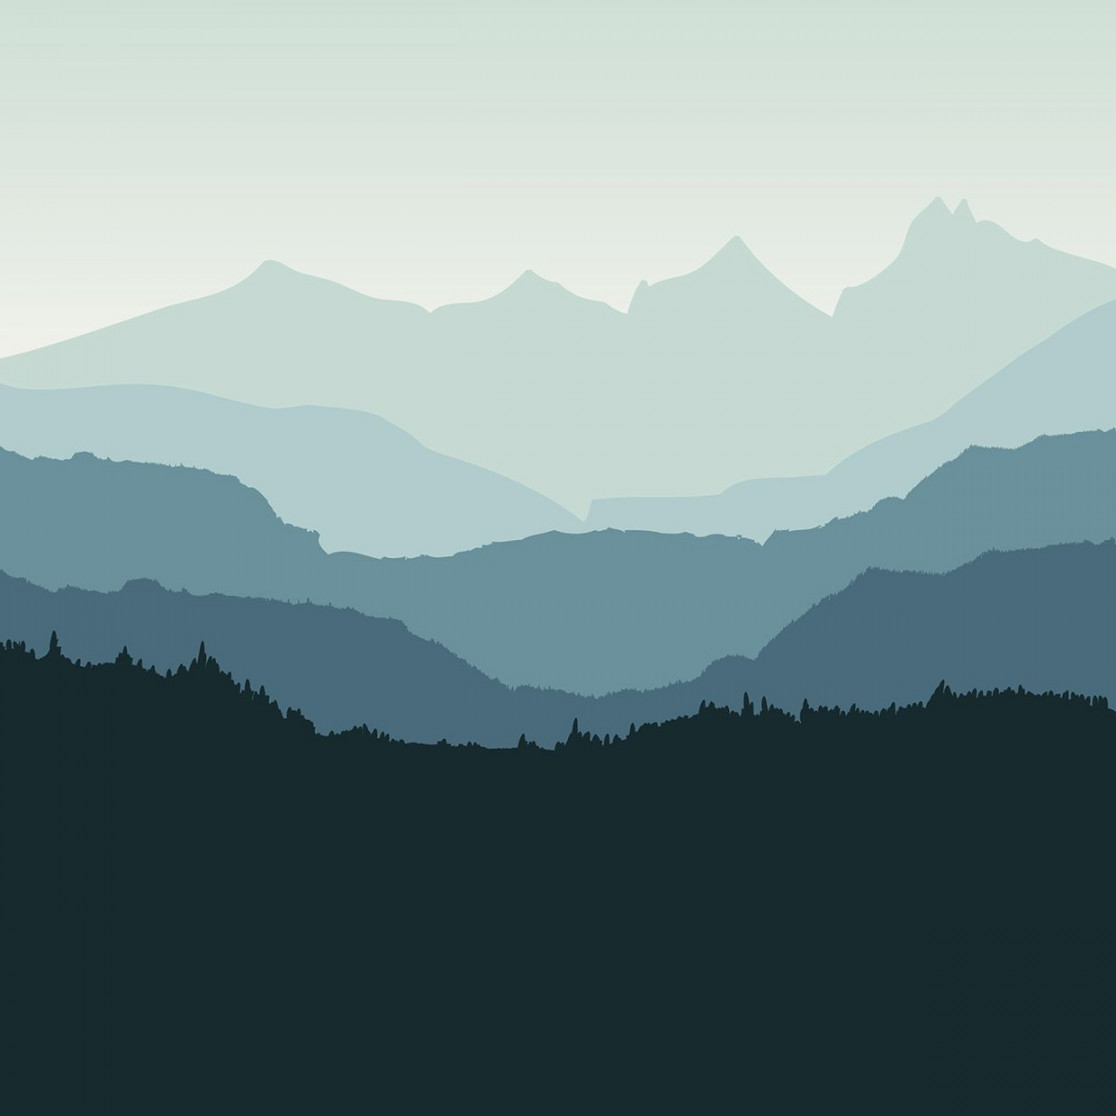 Mountain Background  Mountain background, Mountain illustration